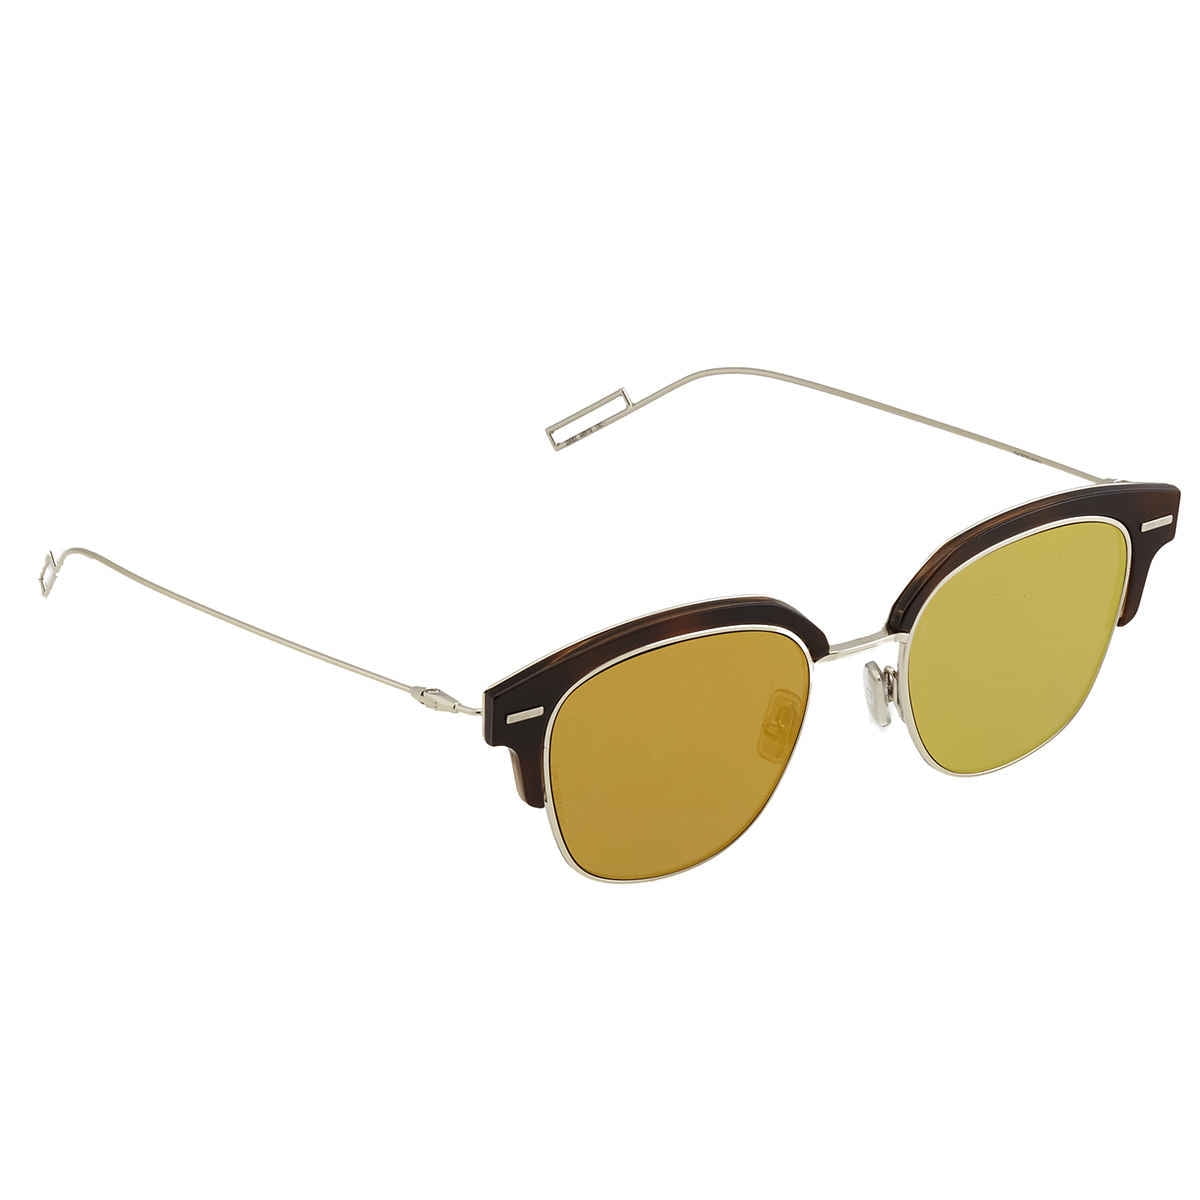 Dior  Accessories  Christian Dior Sunglasses Vintage Style Glasses   Poshmark